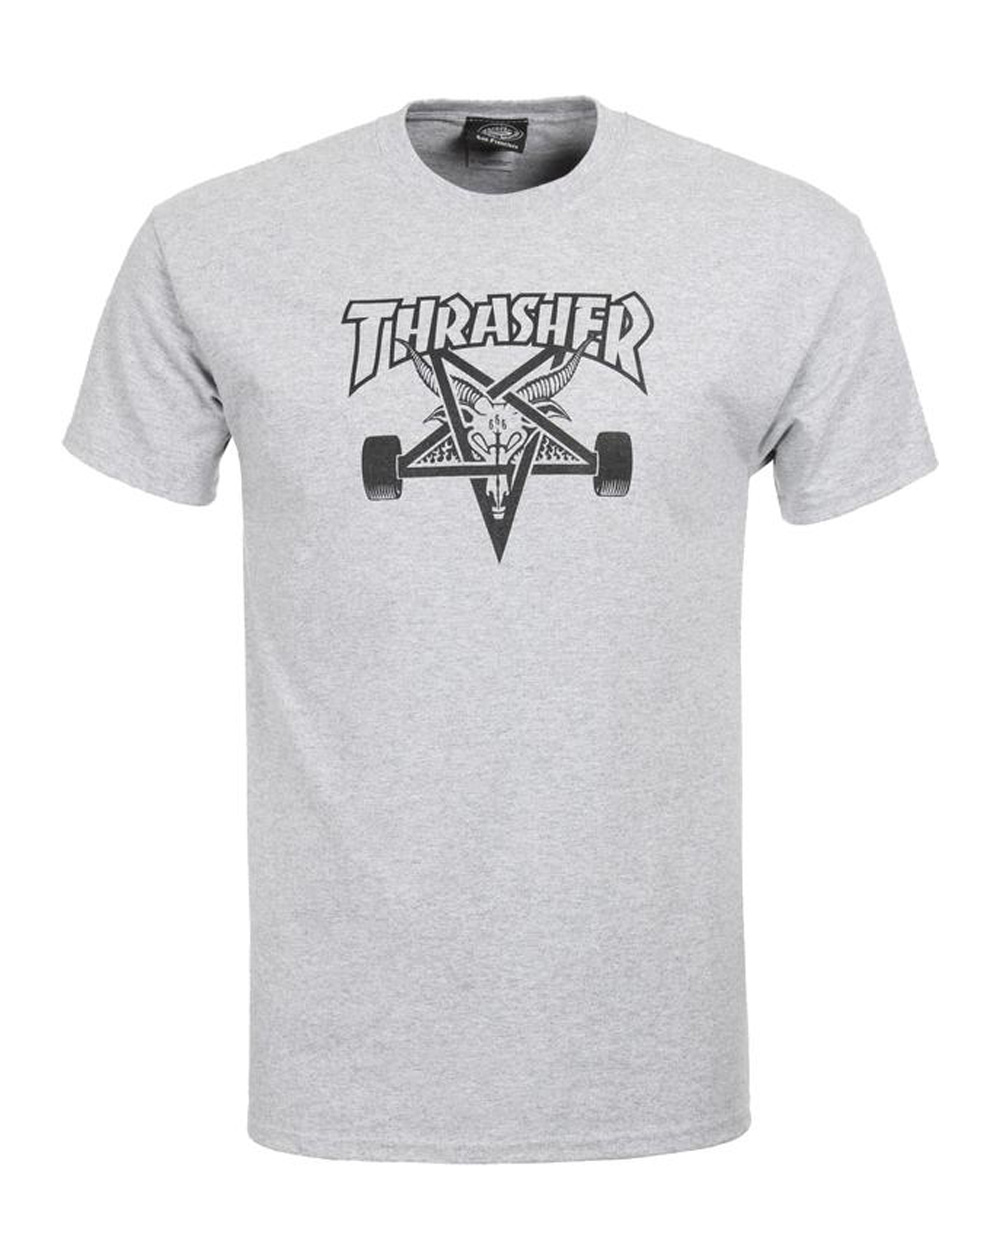 Thrasher Skate Goat Camiseta para Hombre Grey